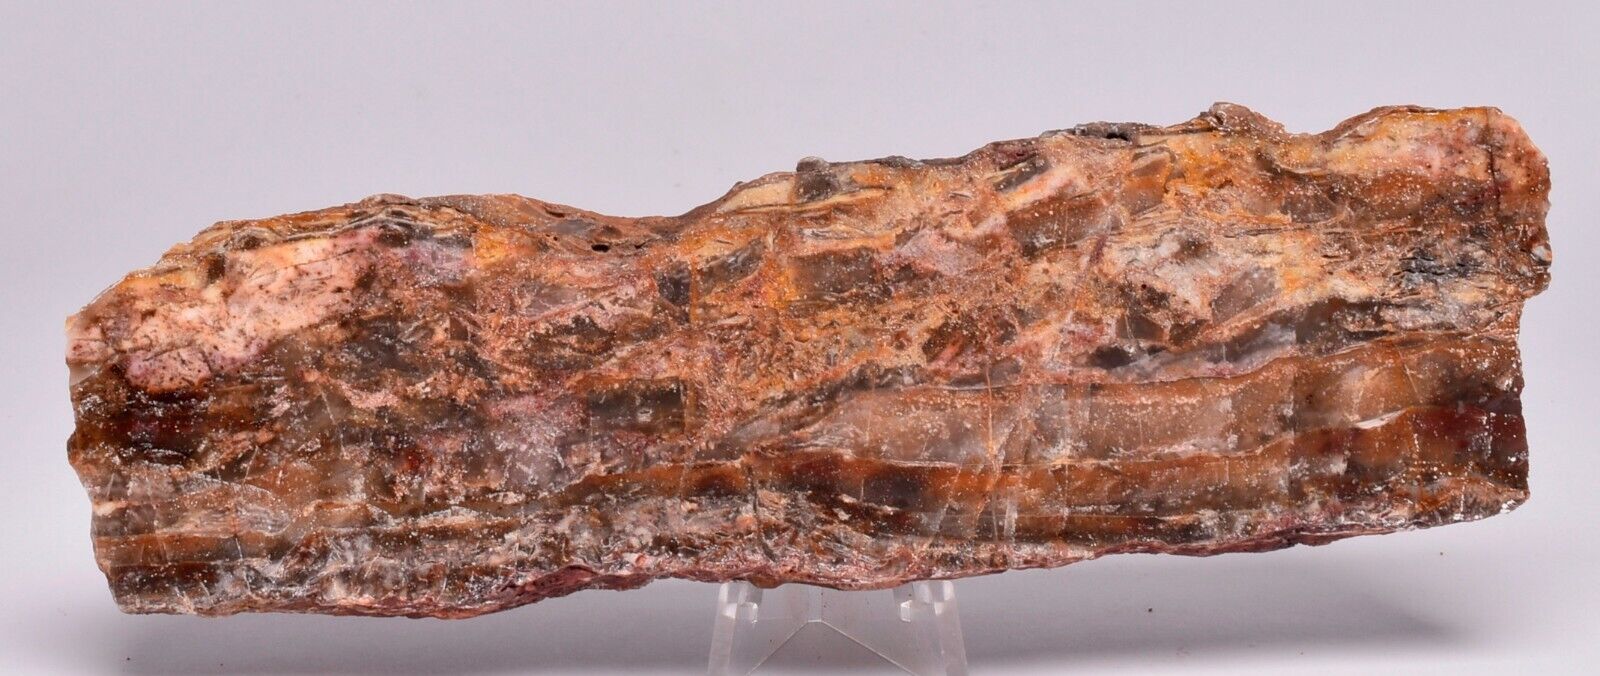 MICROBIAL MAT, Dresser Fmt, Stromatolite, North Pole Dome 180g S584